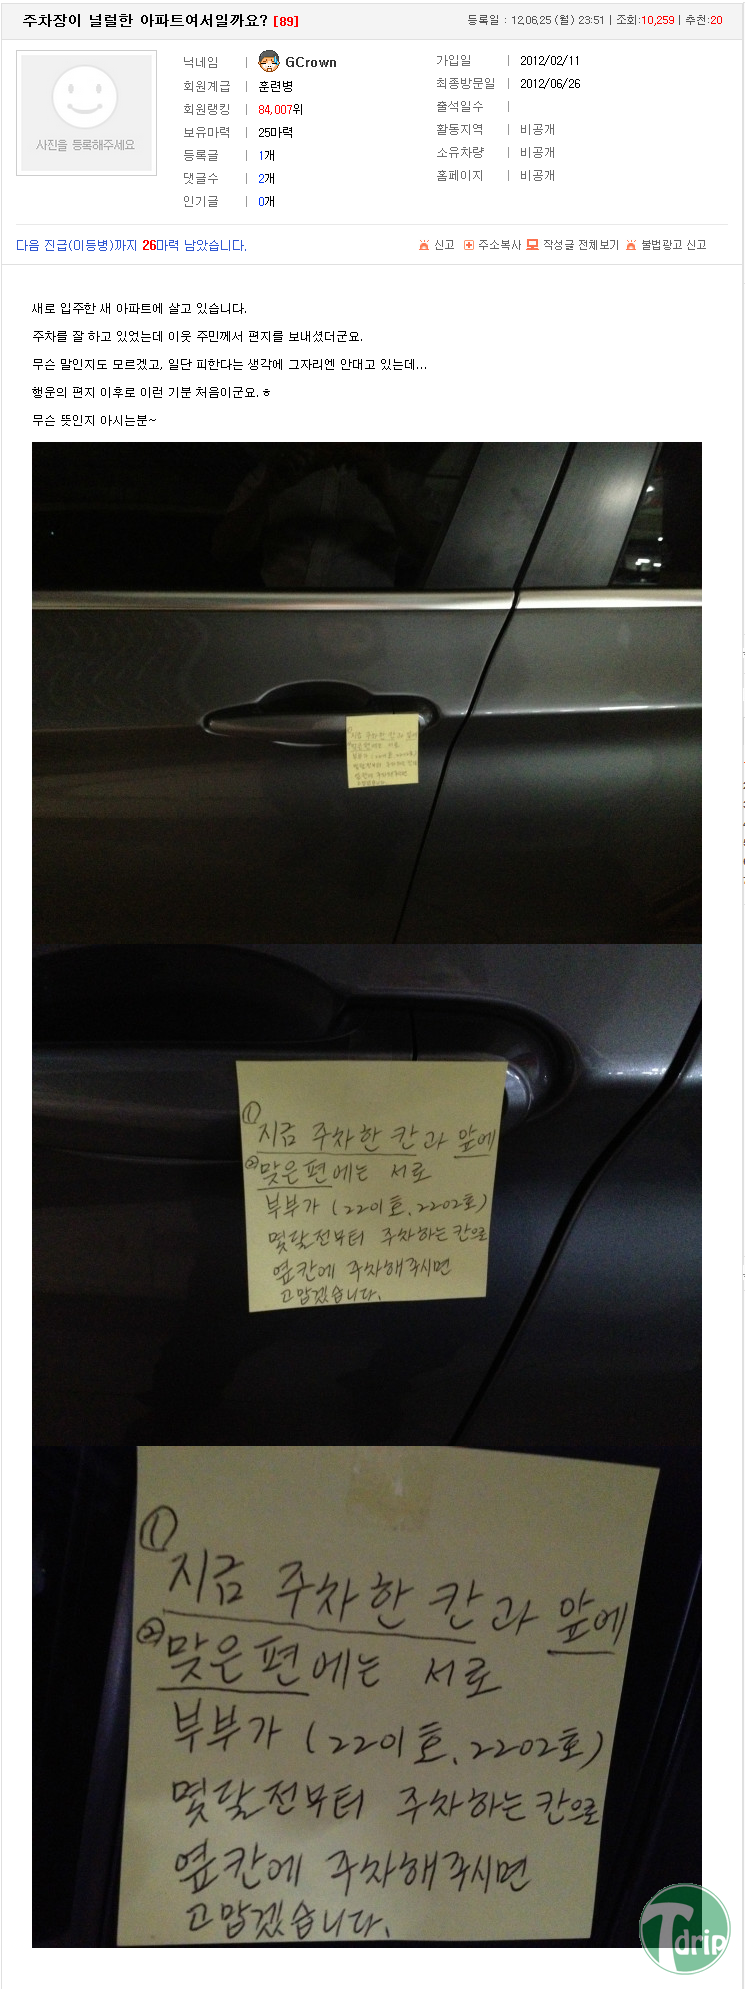 1 (2).png : 아파트 주차장의 흔한 김여사의 메모.jpg